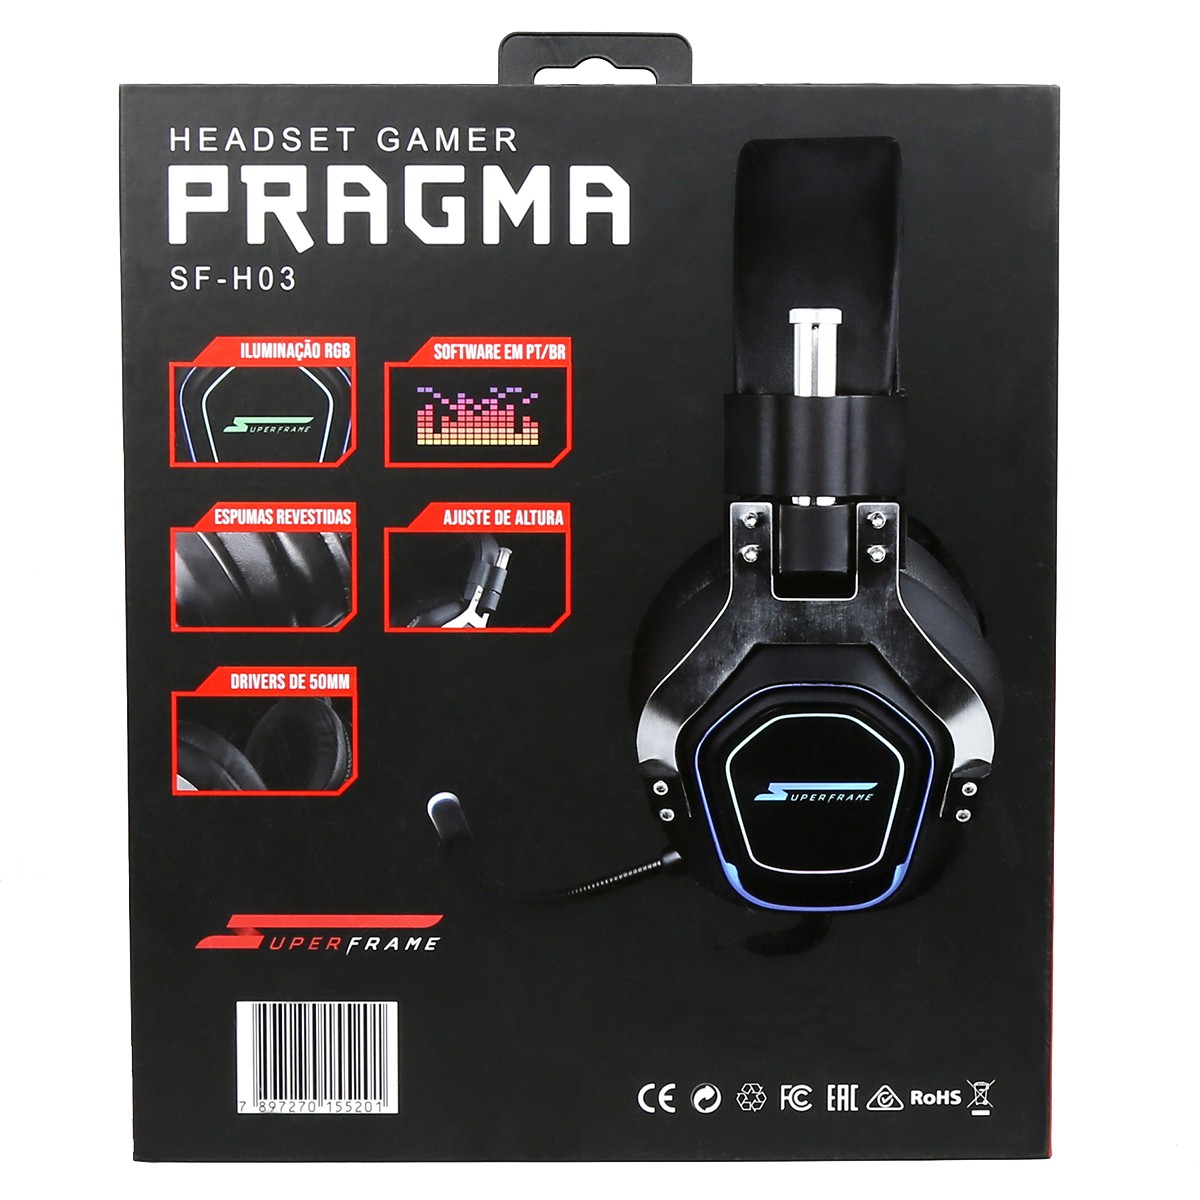 Headset gamer PRAGMA